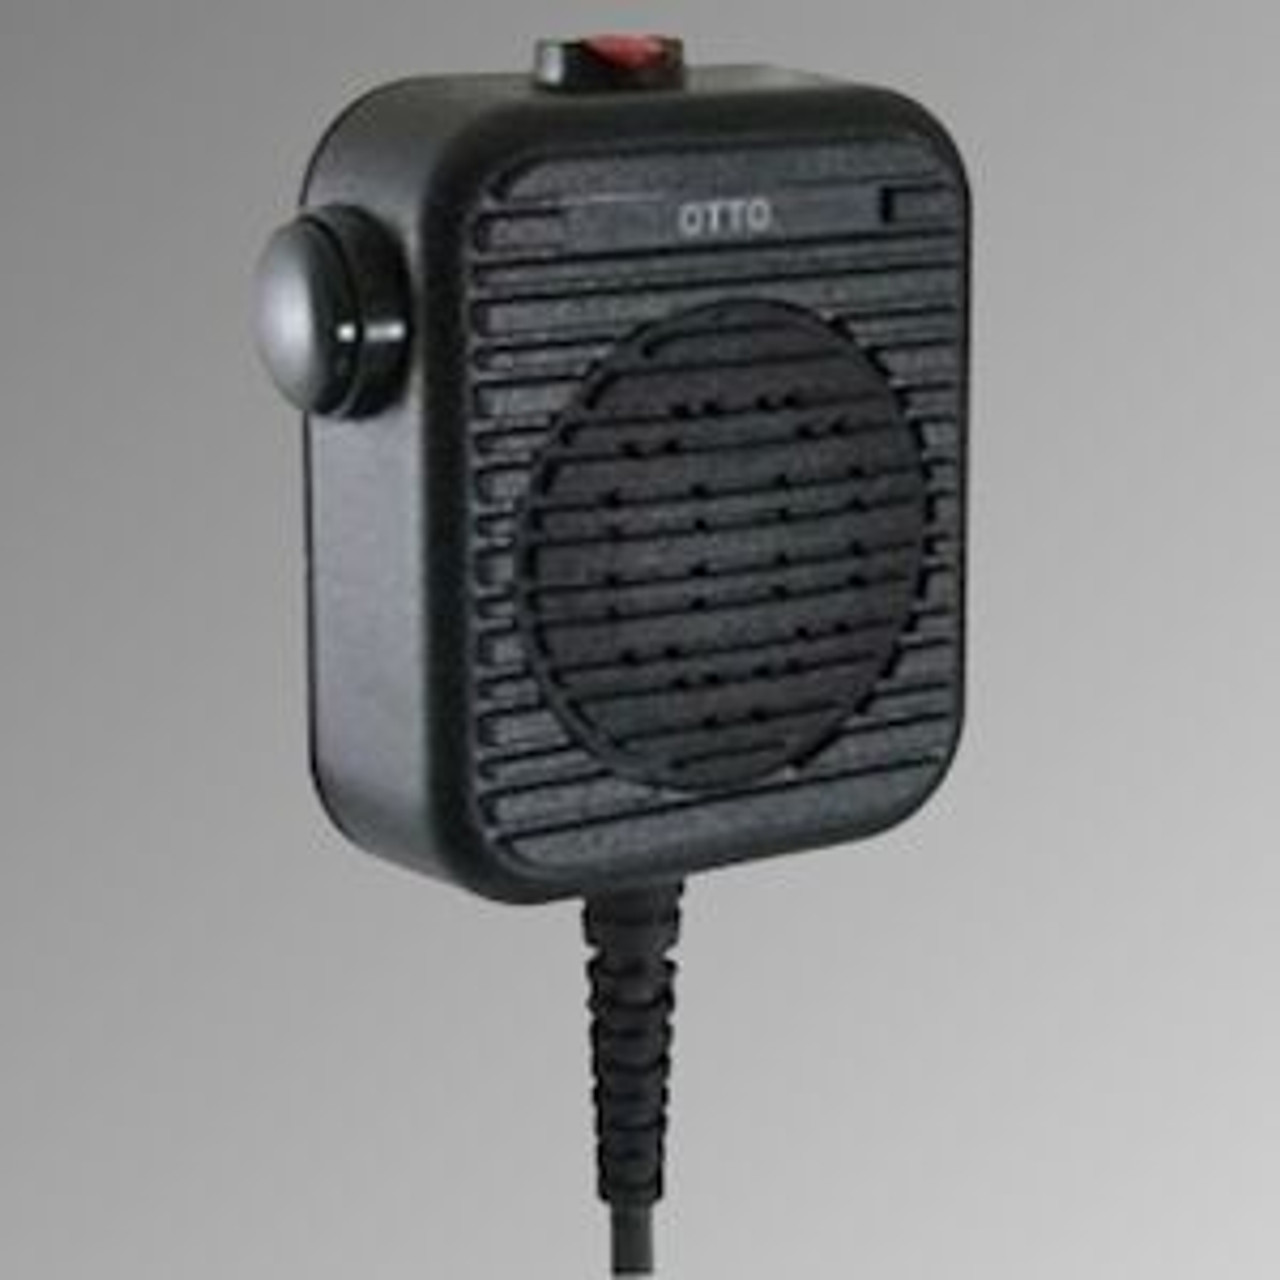 Otto Genesis II Ruggedized Speaker Mic For Harris P7350